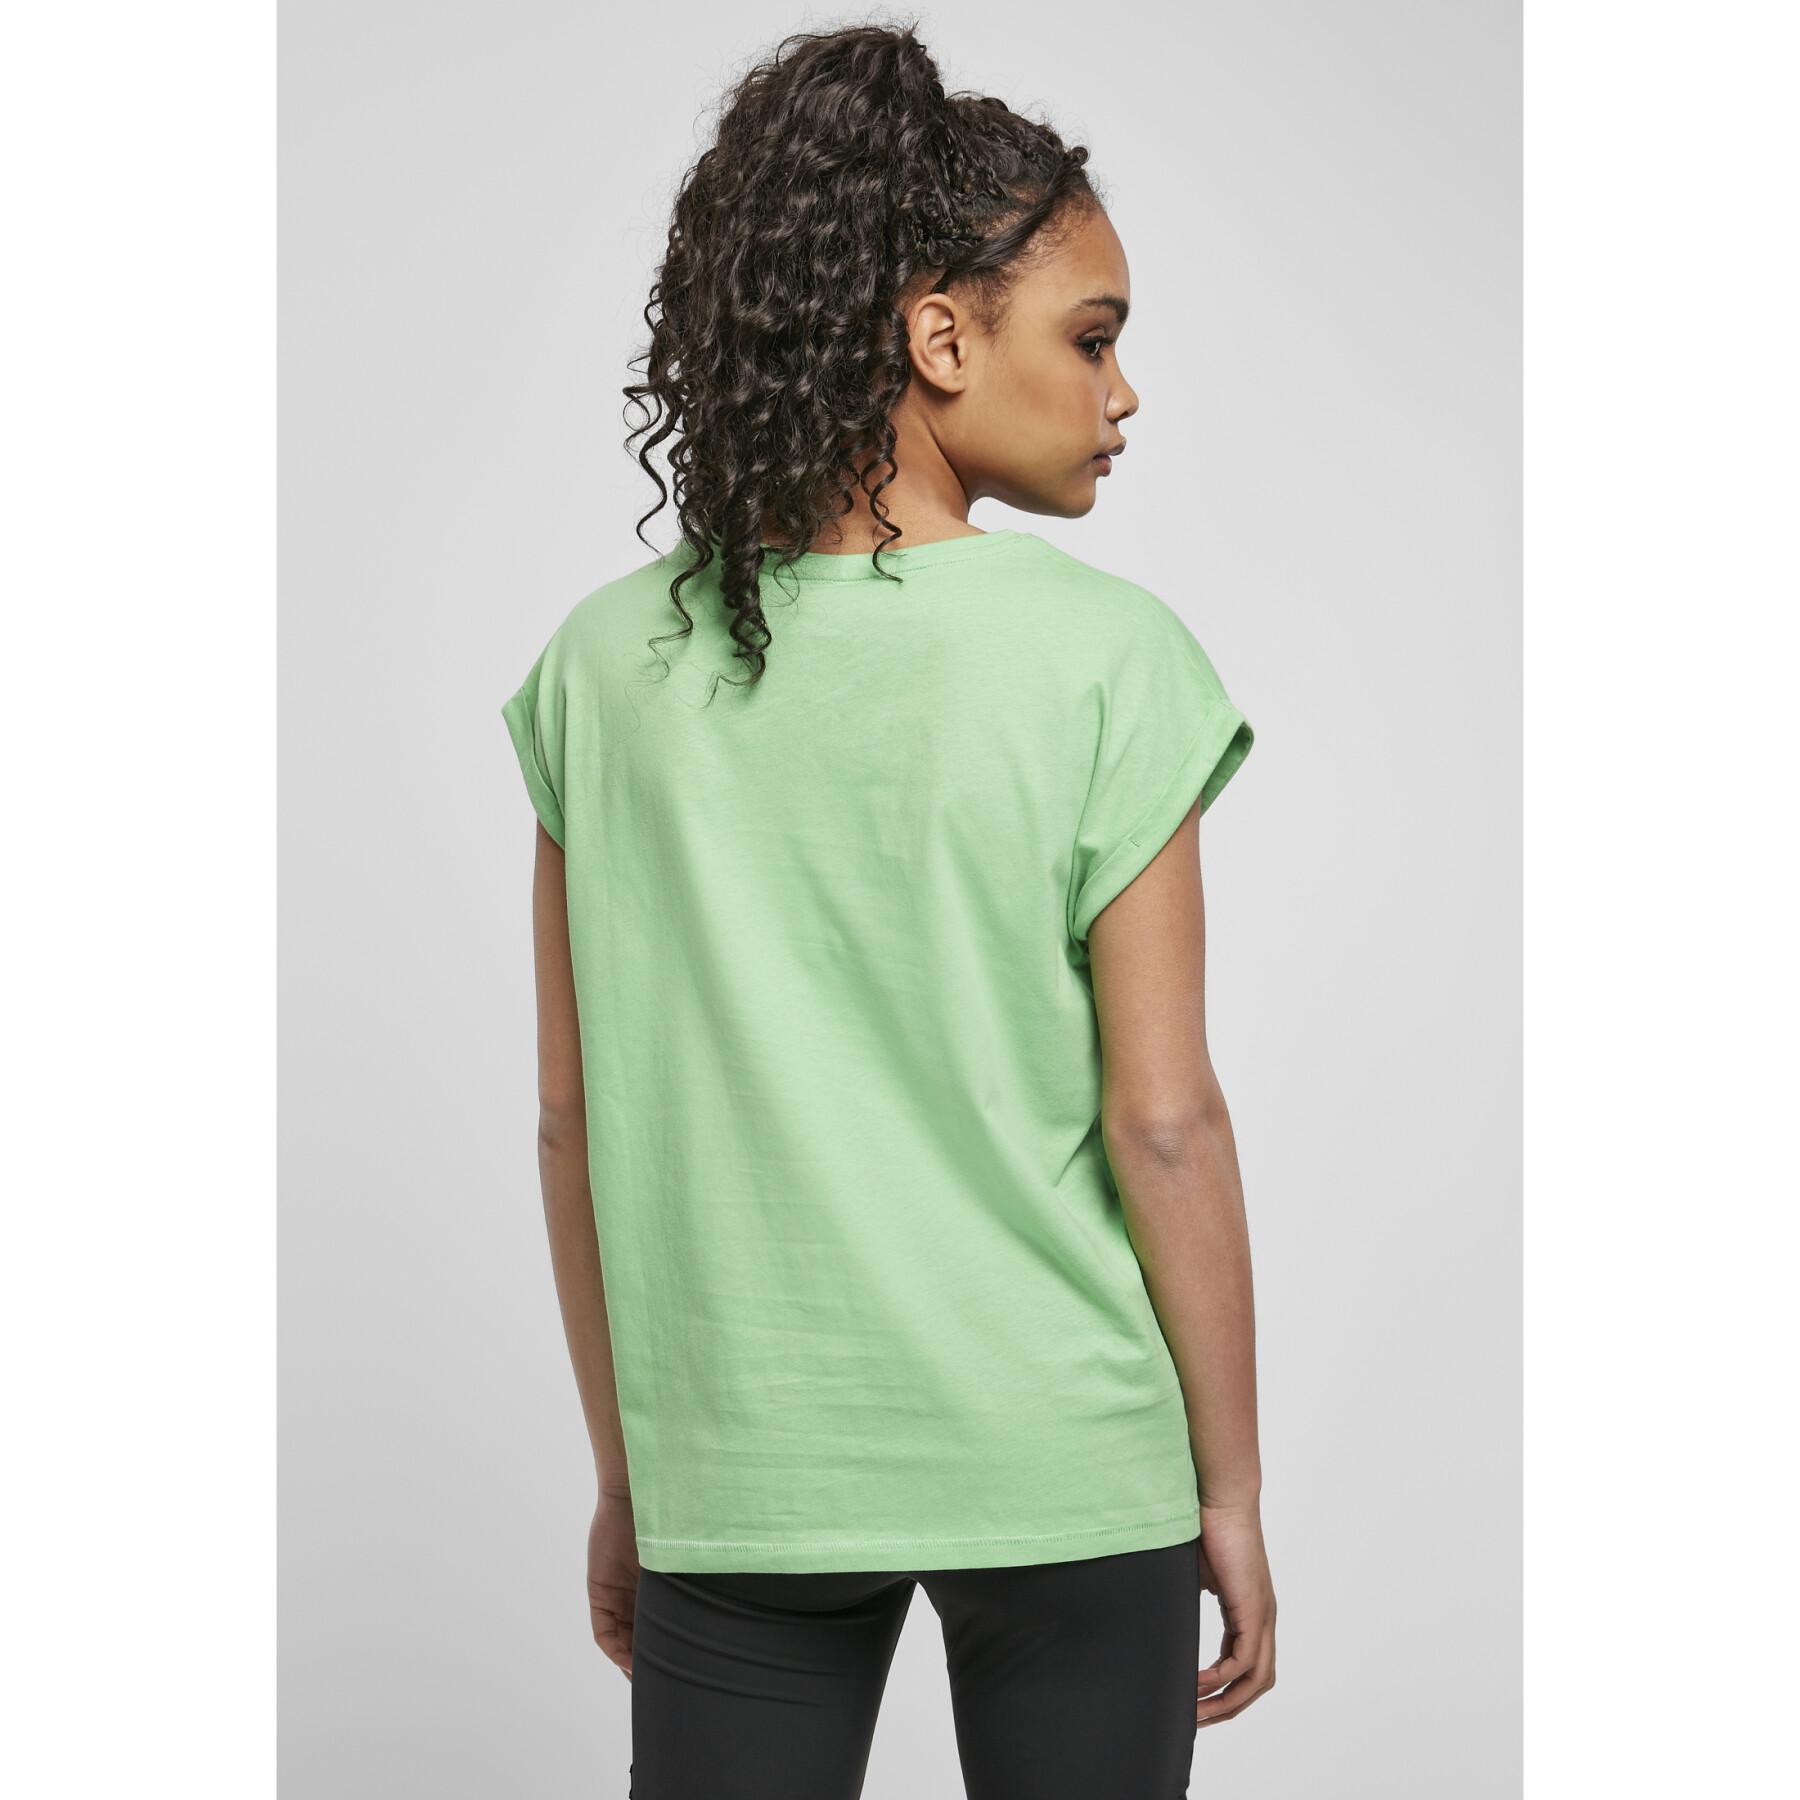 Camiseta mujer Urban Classics extended shoulder-tamaños grandes